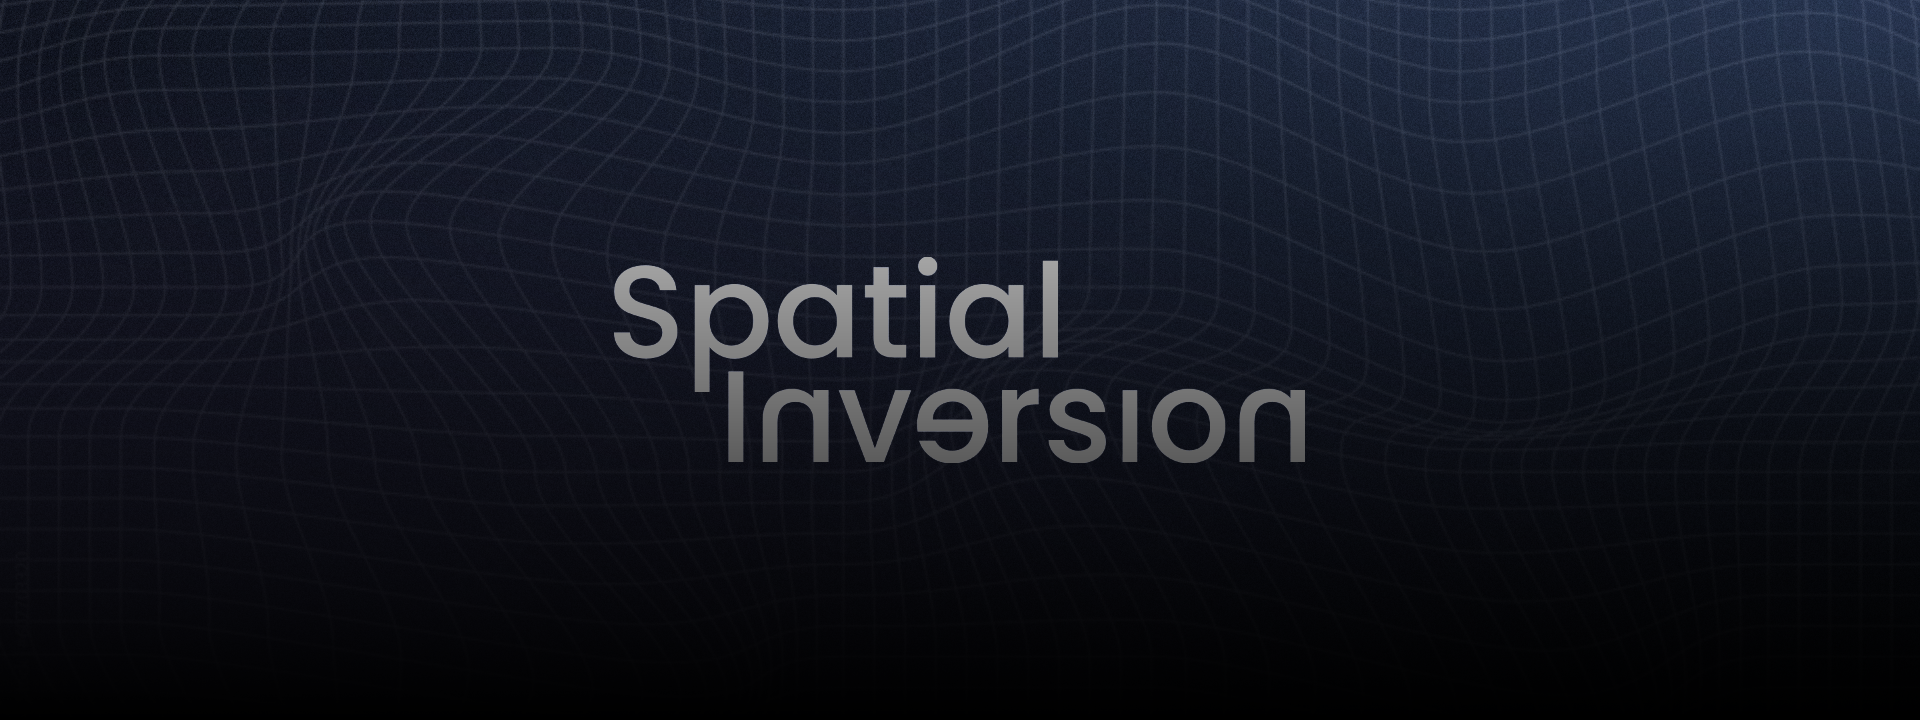 Spatial Inversion